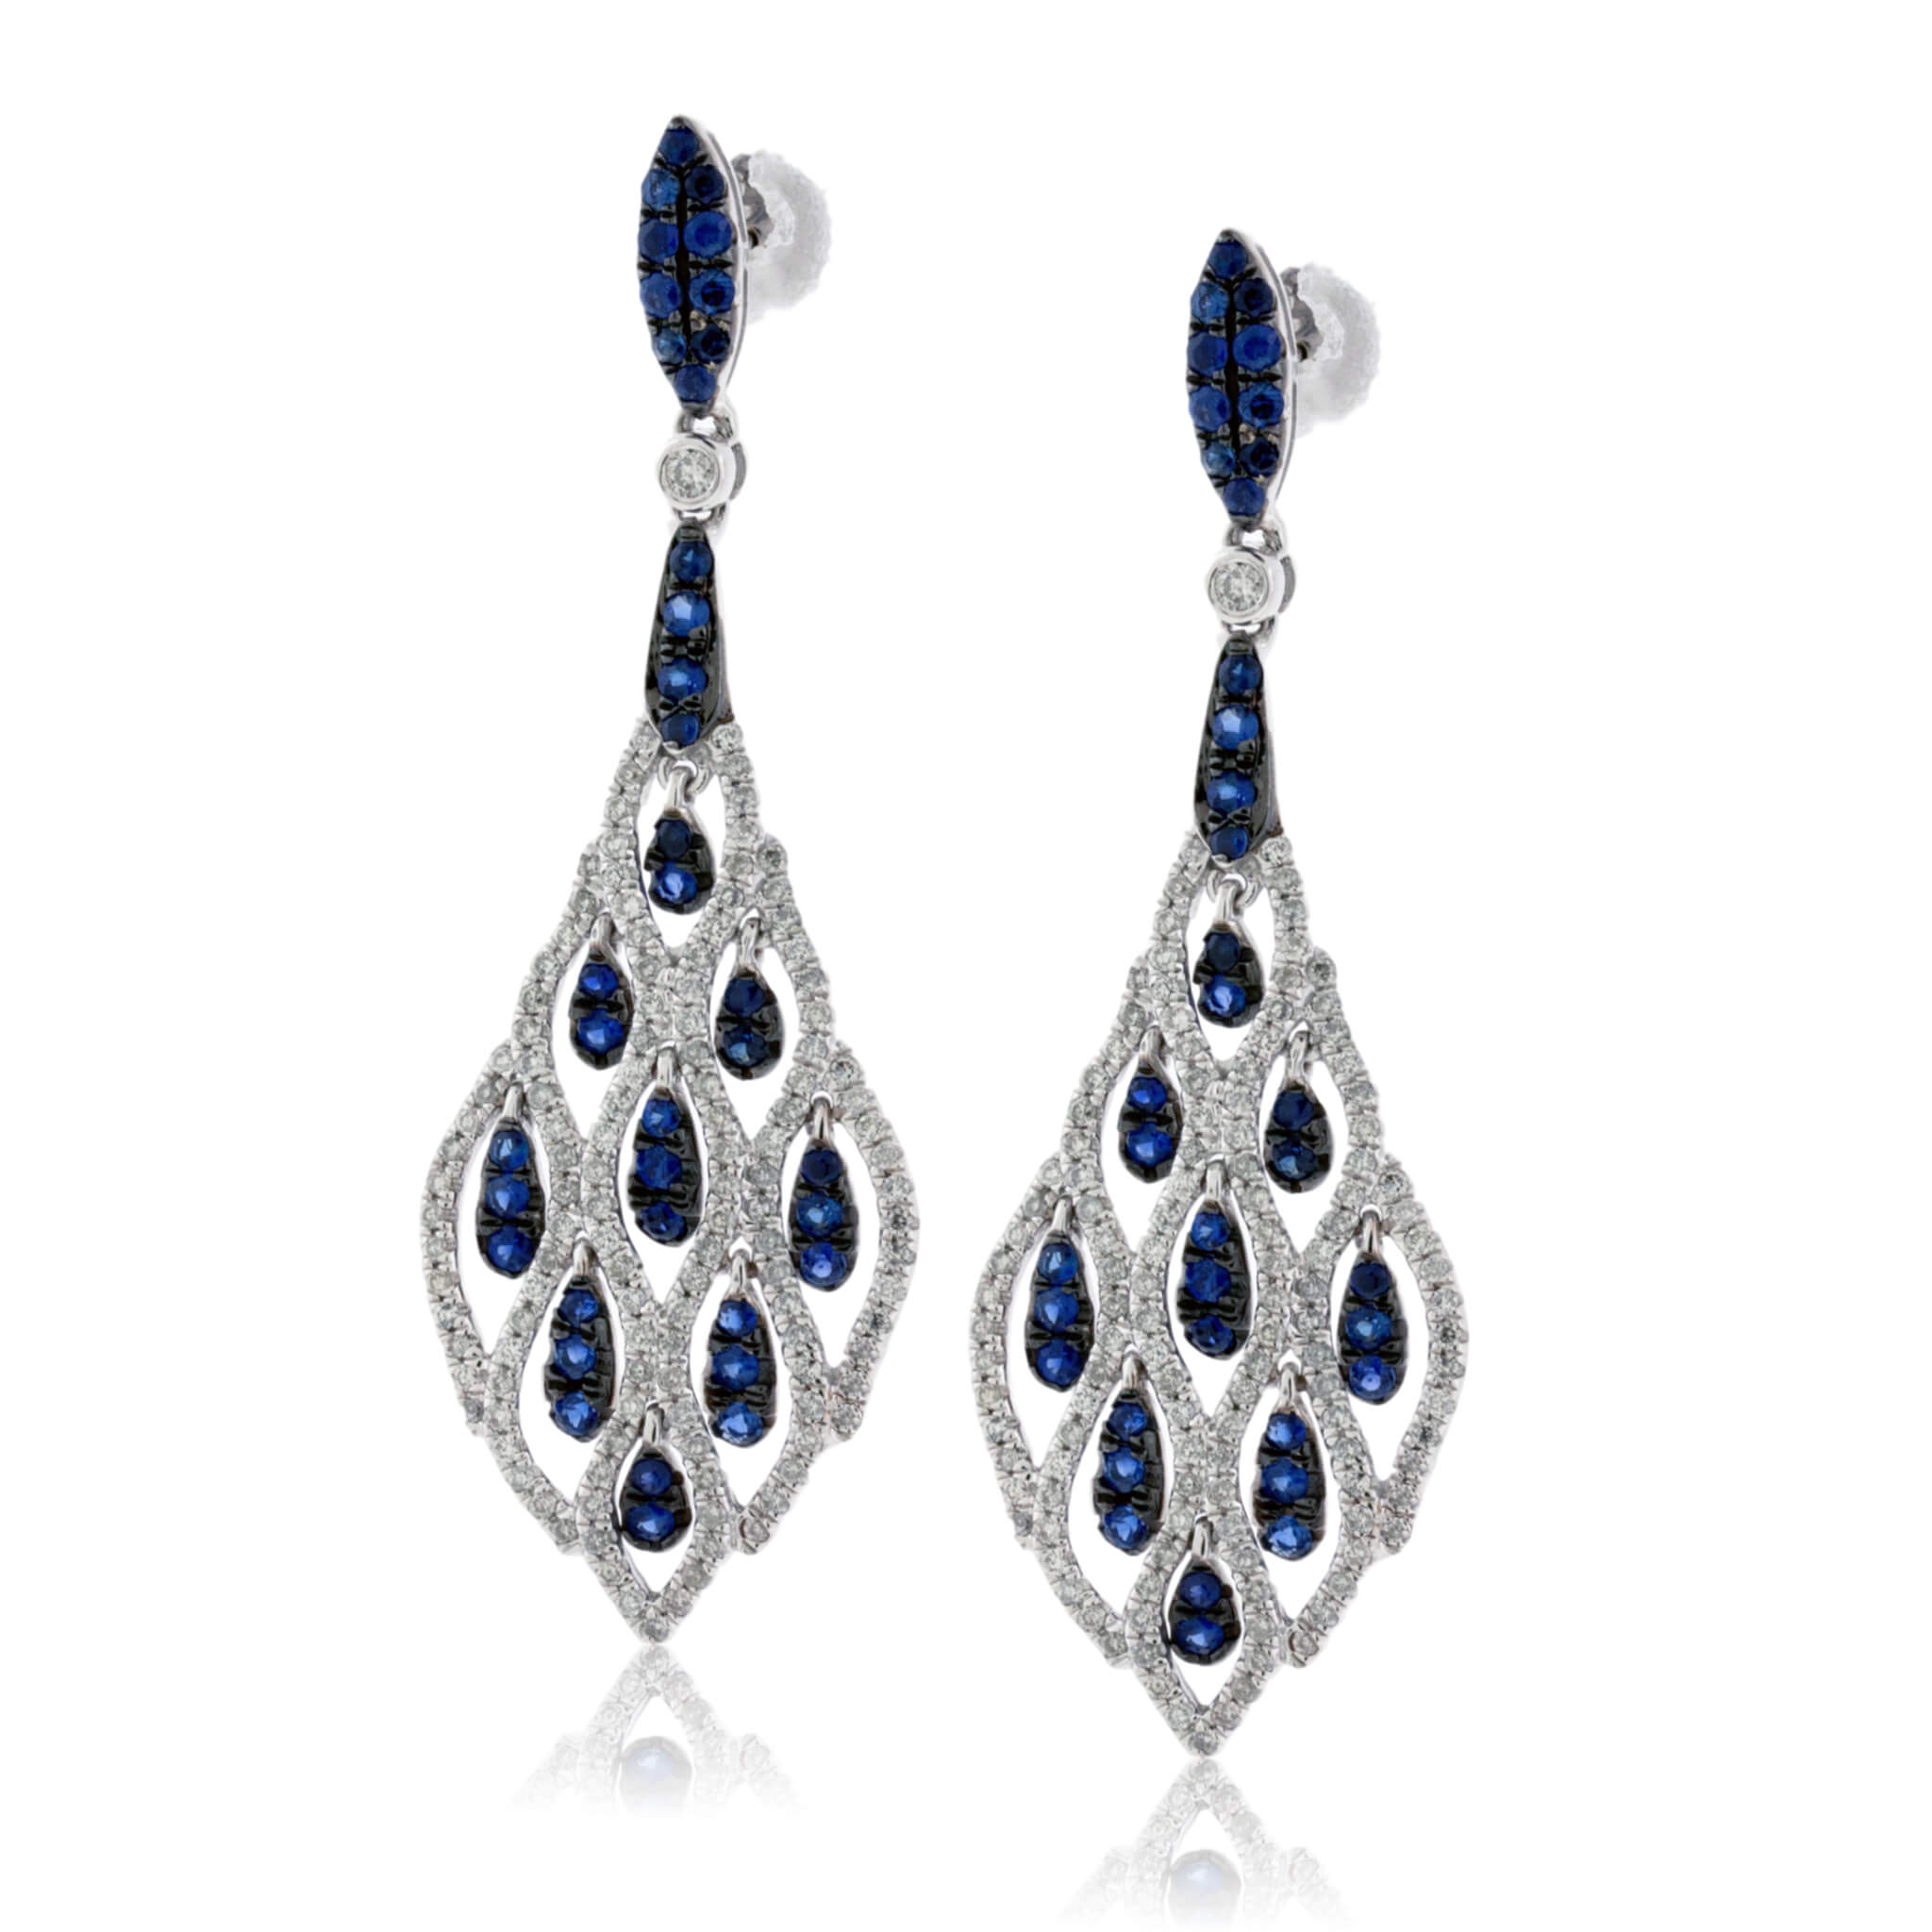 Details more than 259 diamond dangle earrings